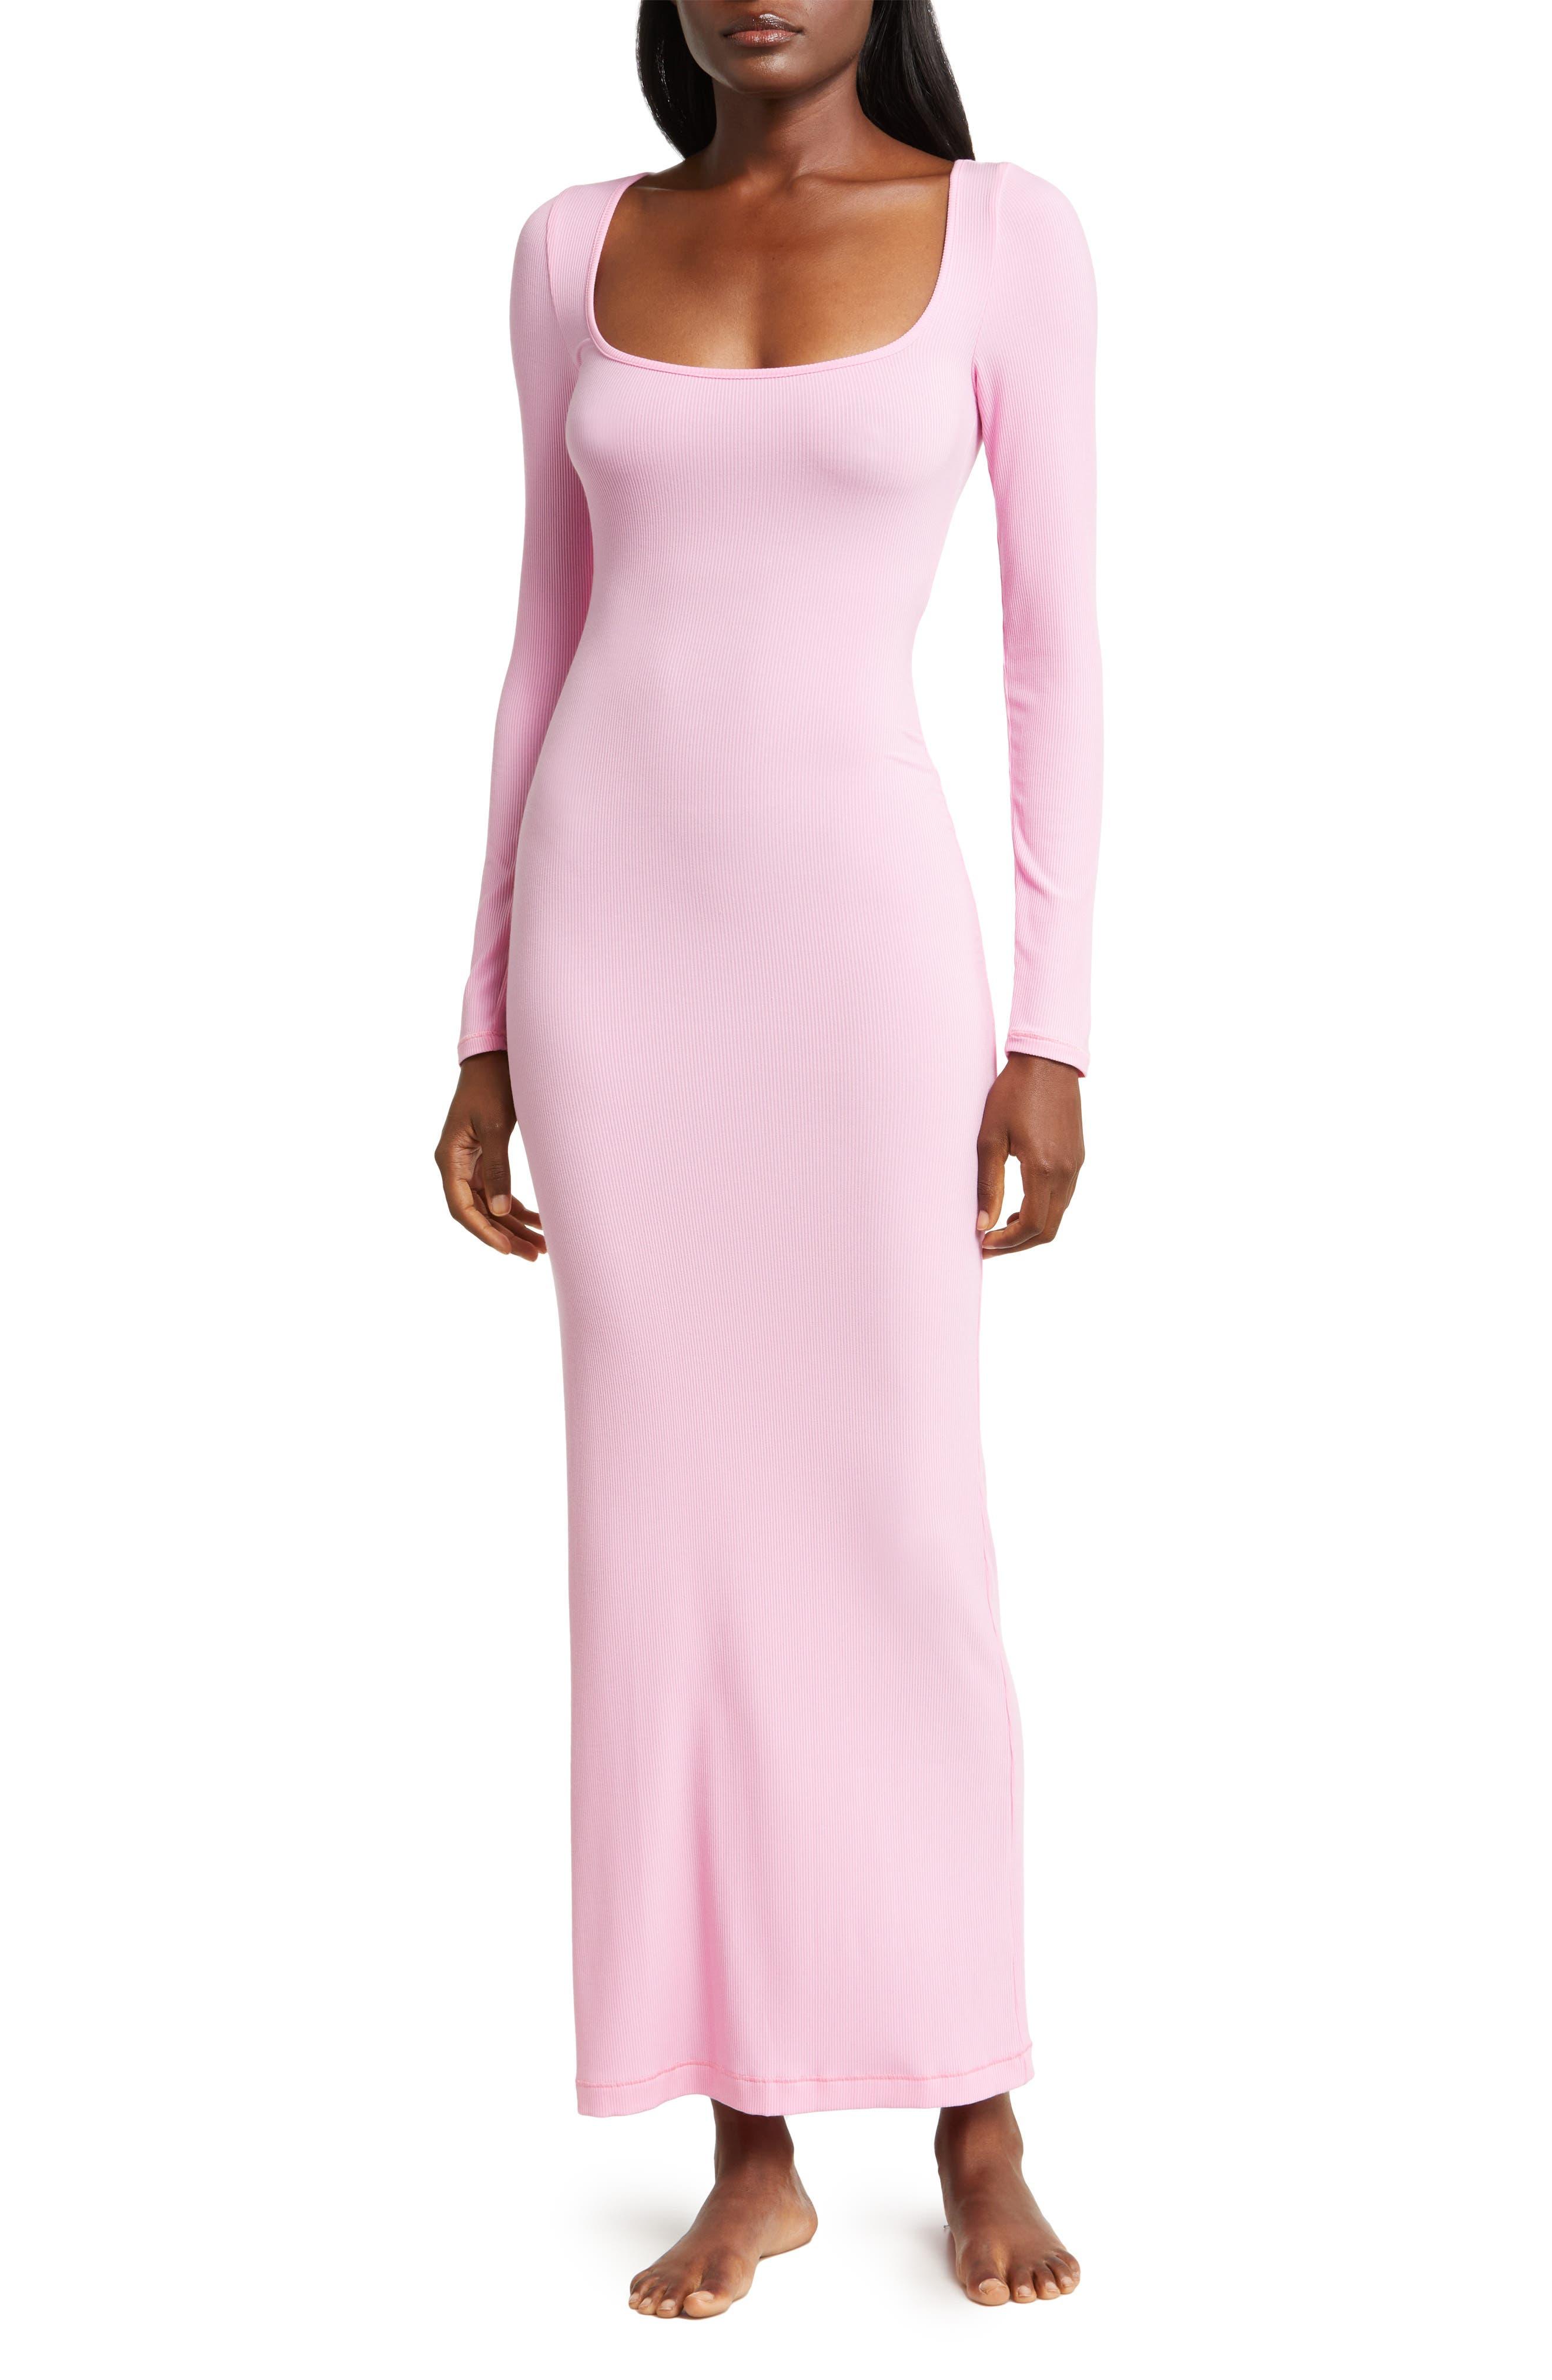 skims pink dress